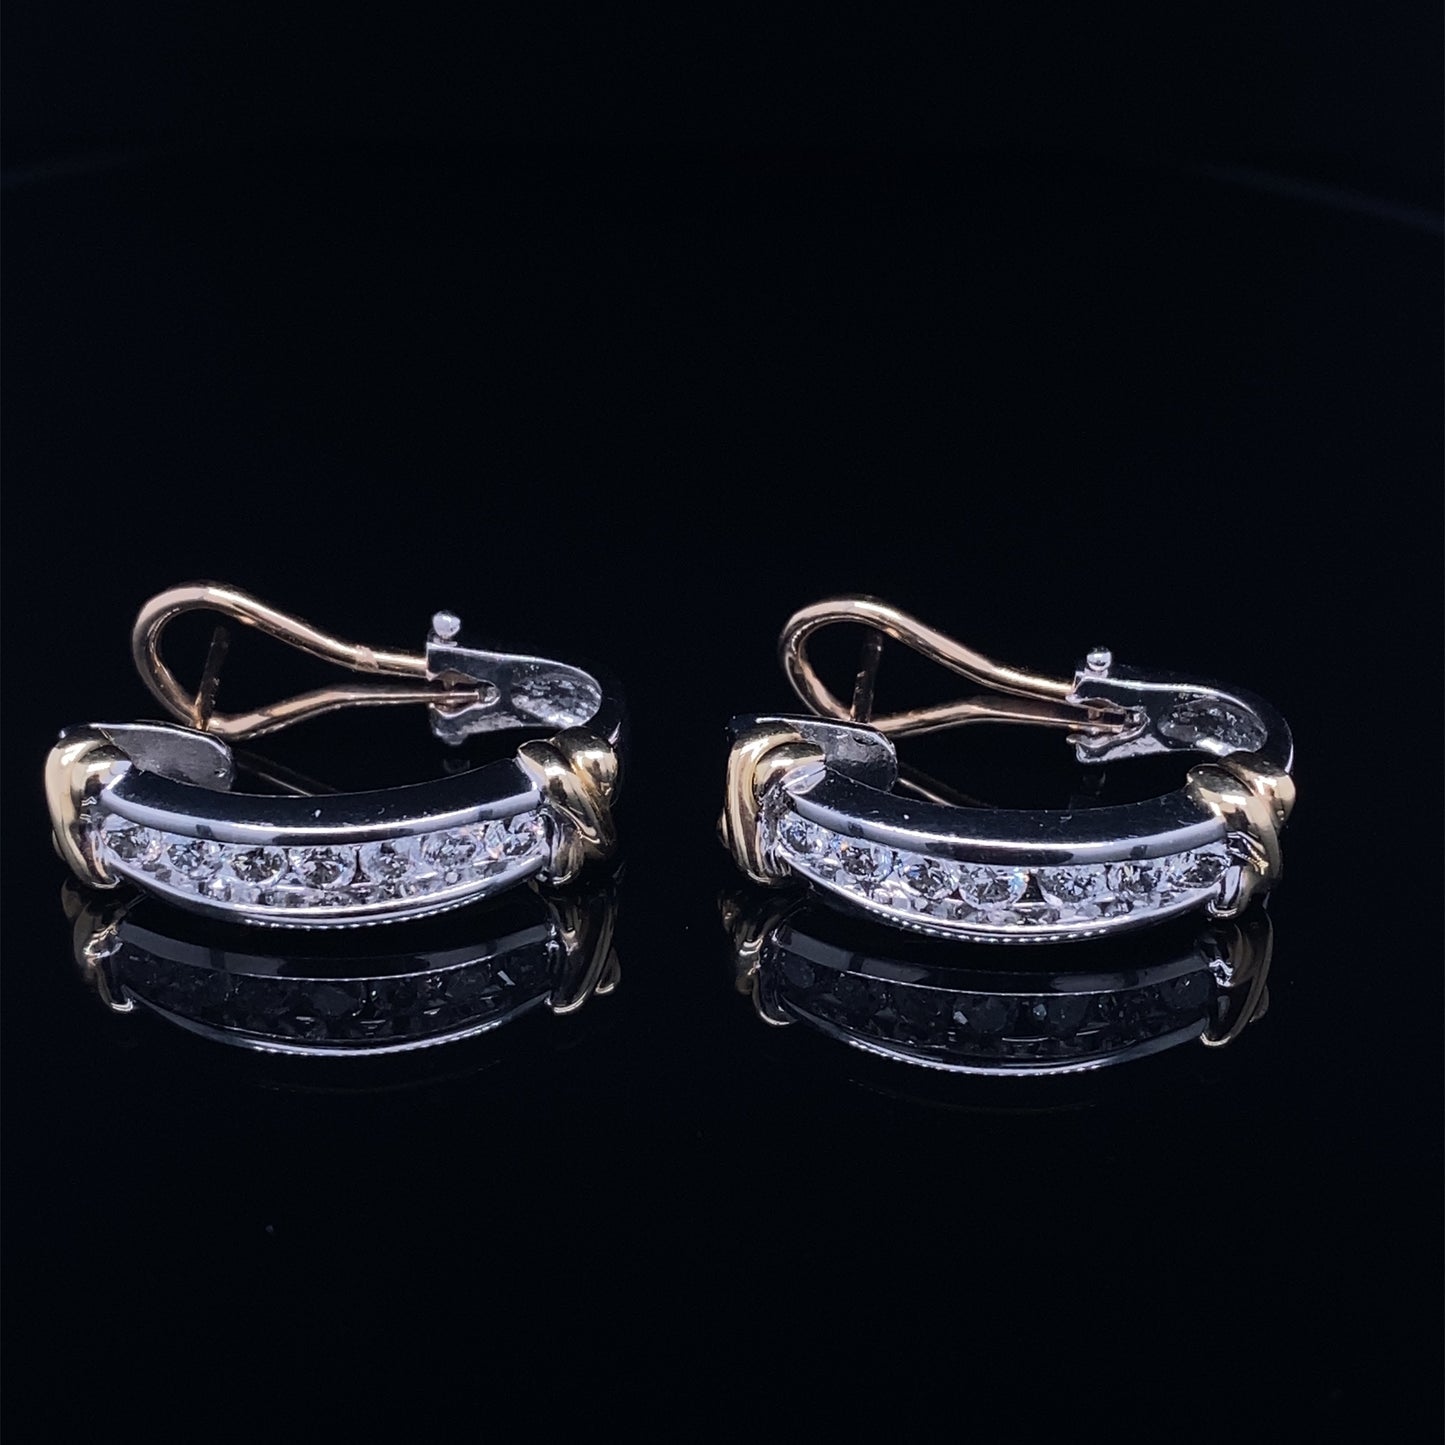 Circa 2000s 1.75 CTW Diamond Hoop Earrings in Two Tone 14K Gold